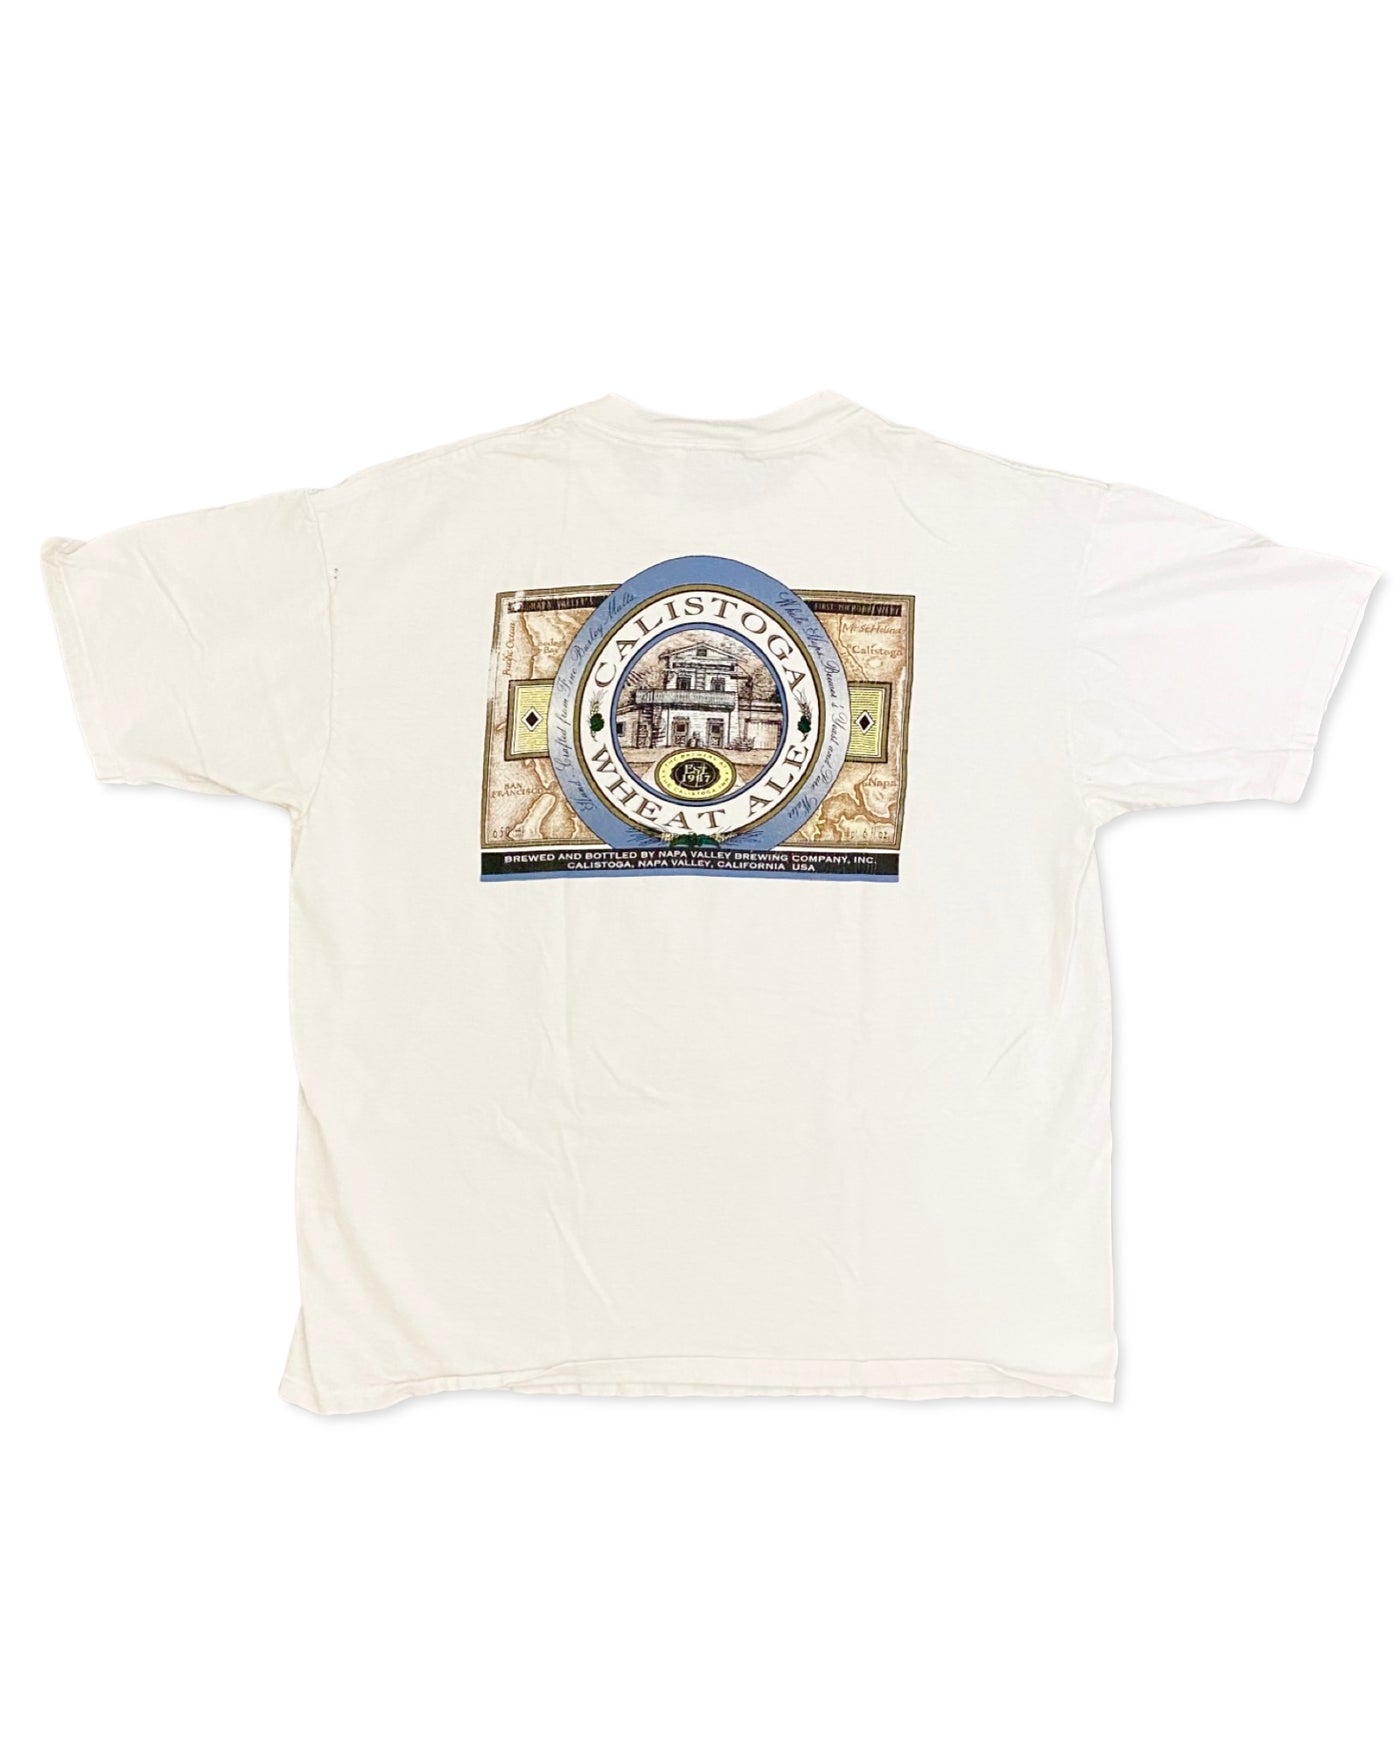 Vintage 90s Calistoga Inn Brewery T-Shirt